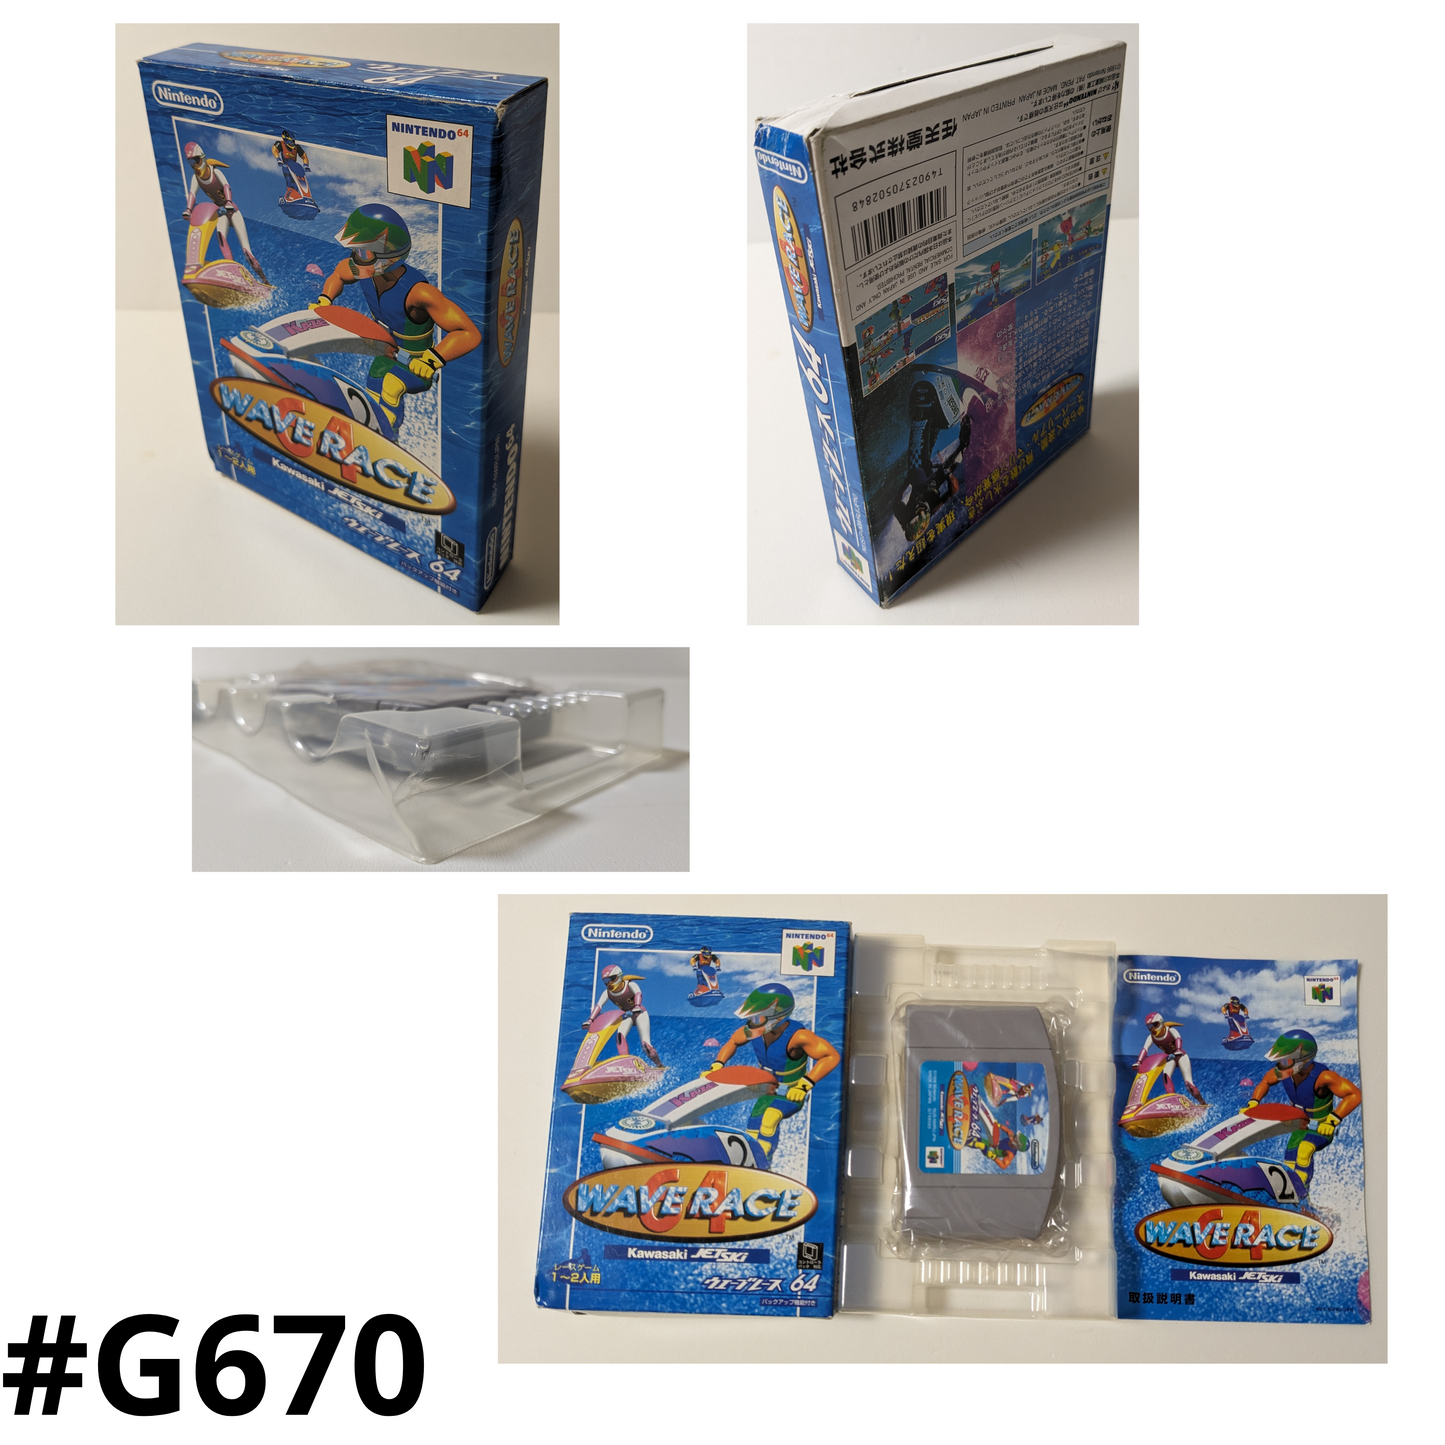 WAVE RACE 64 | Nintendo 64